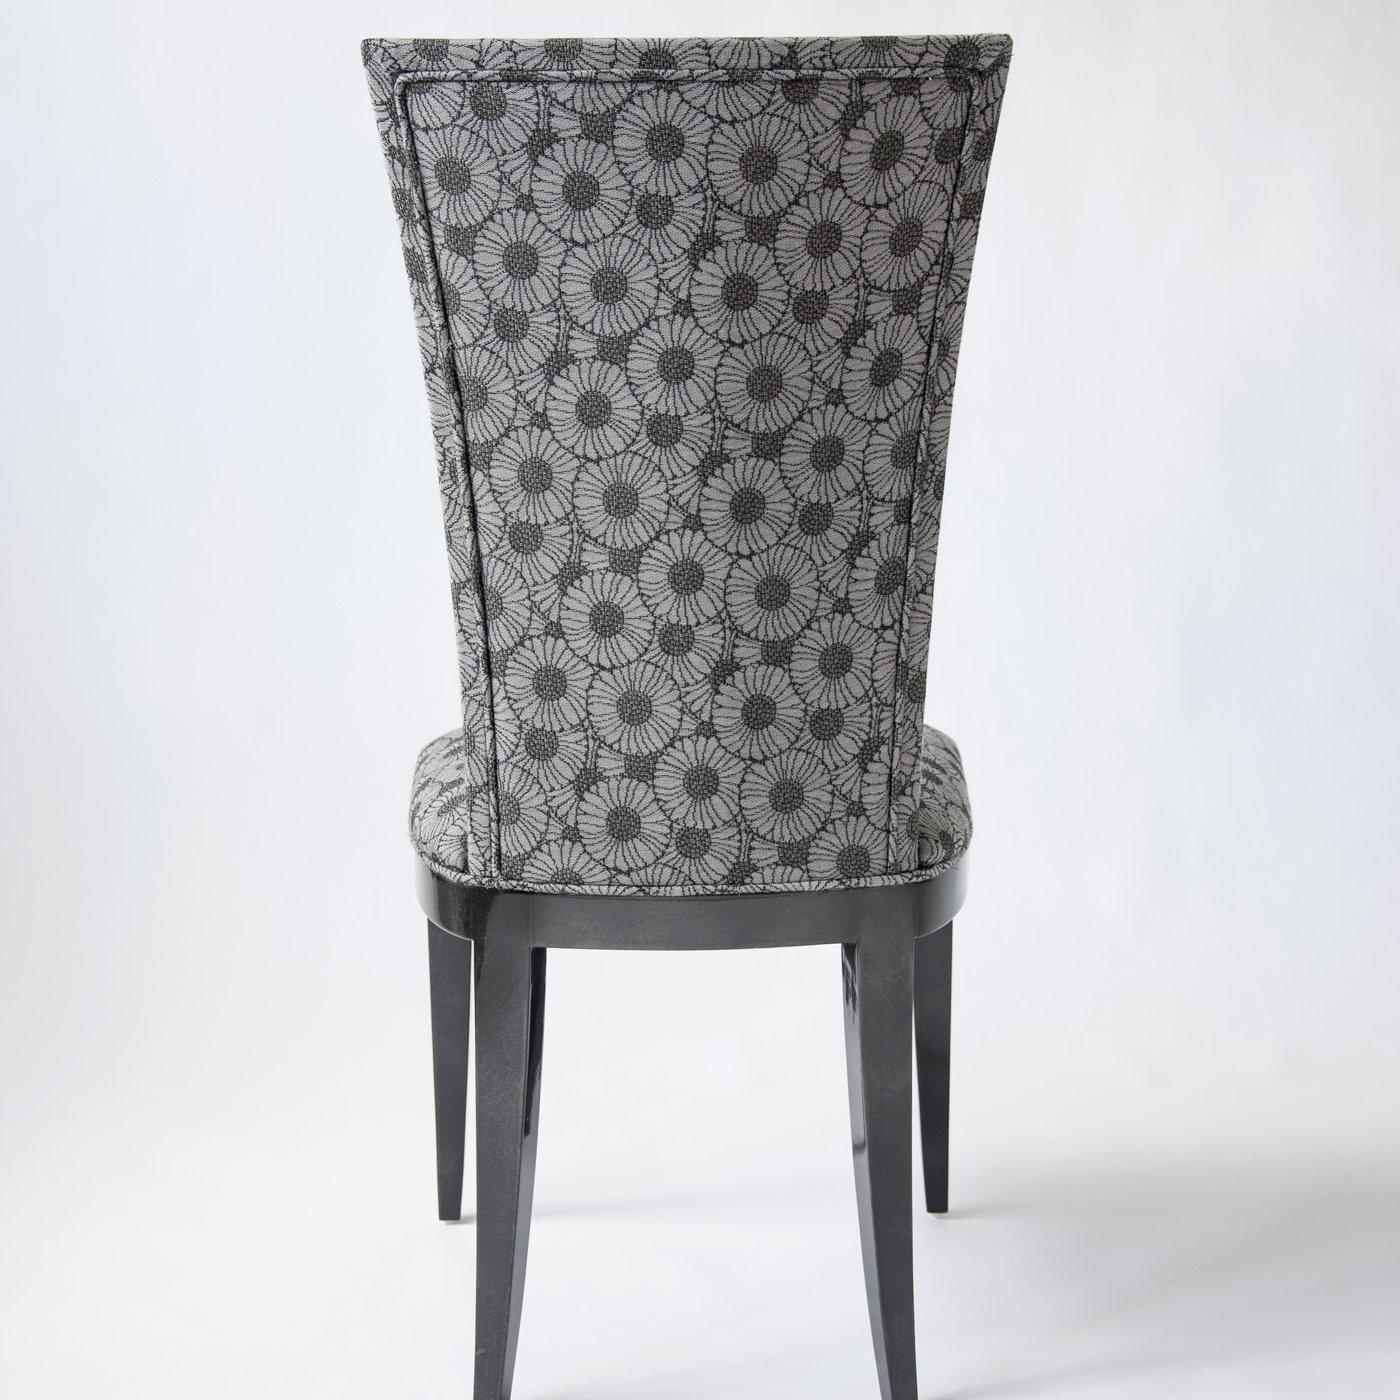 Italian Deco Chair